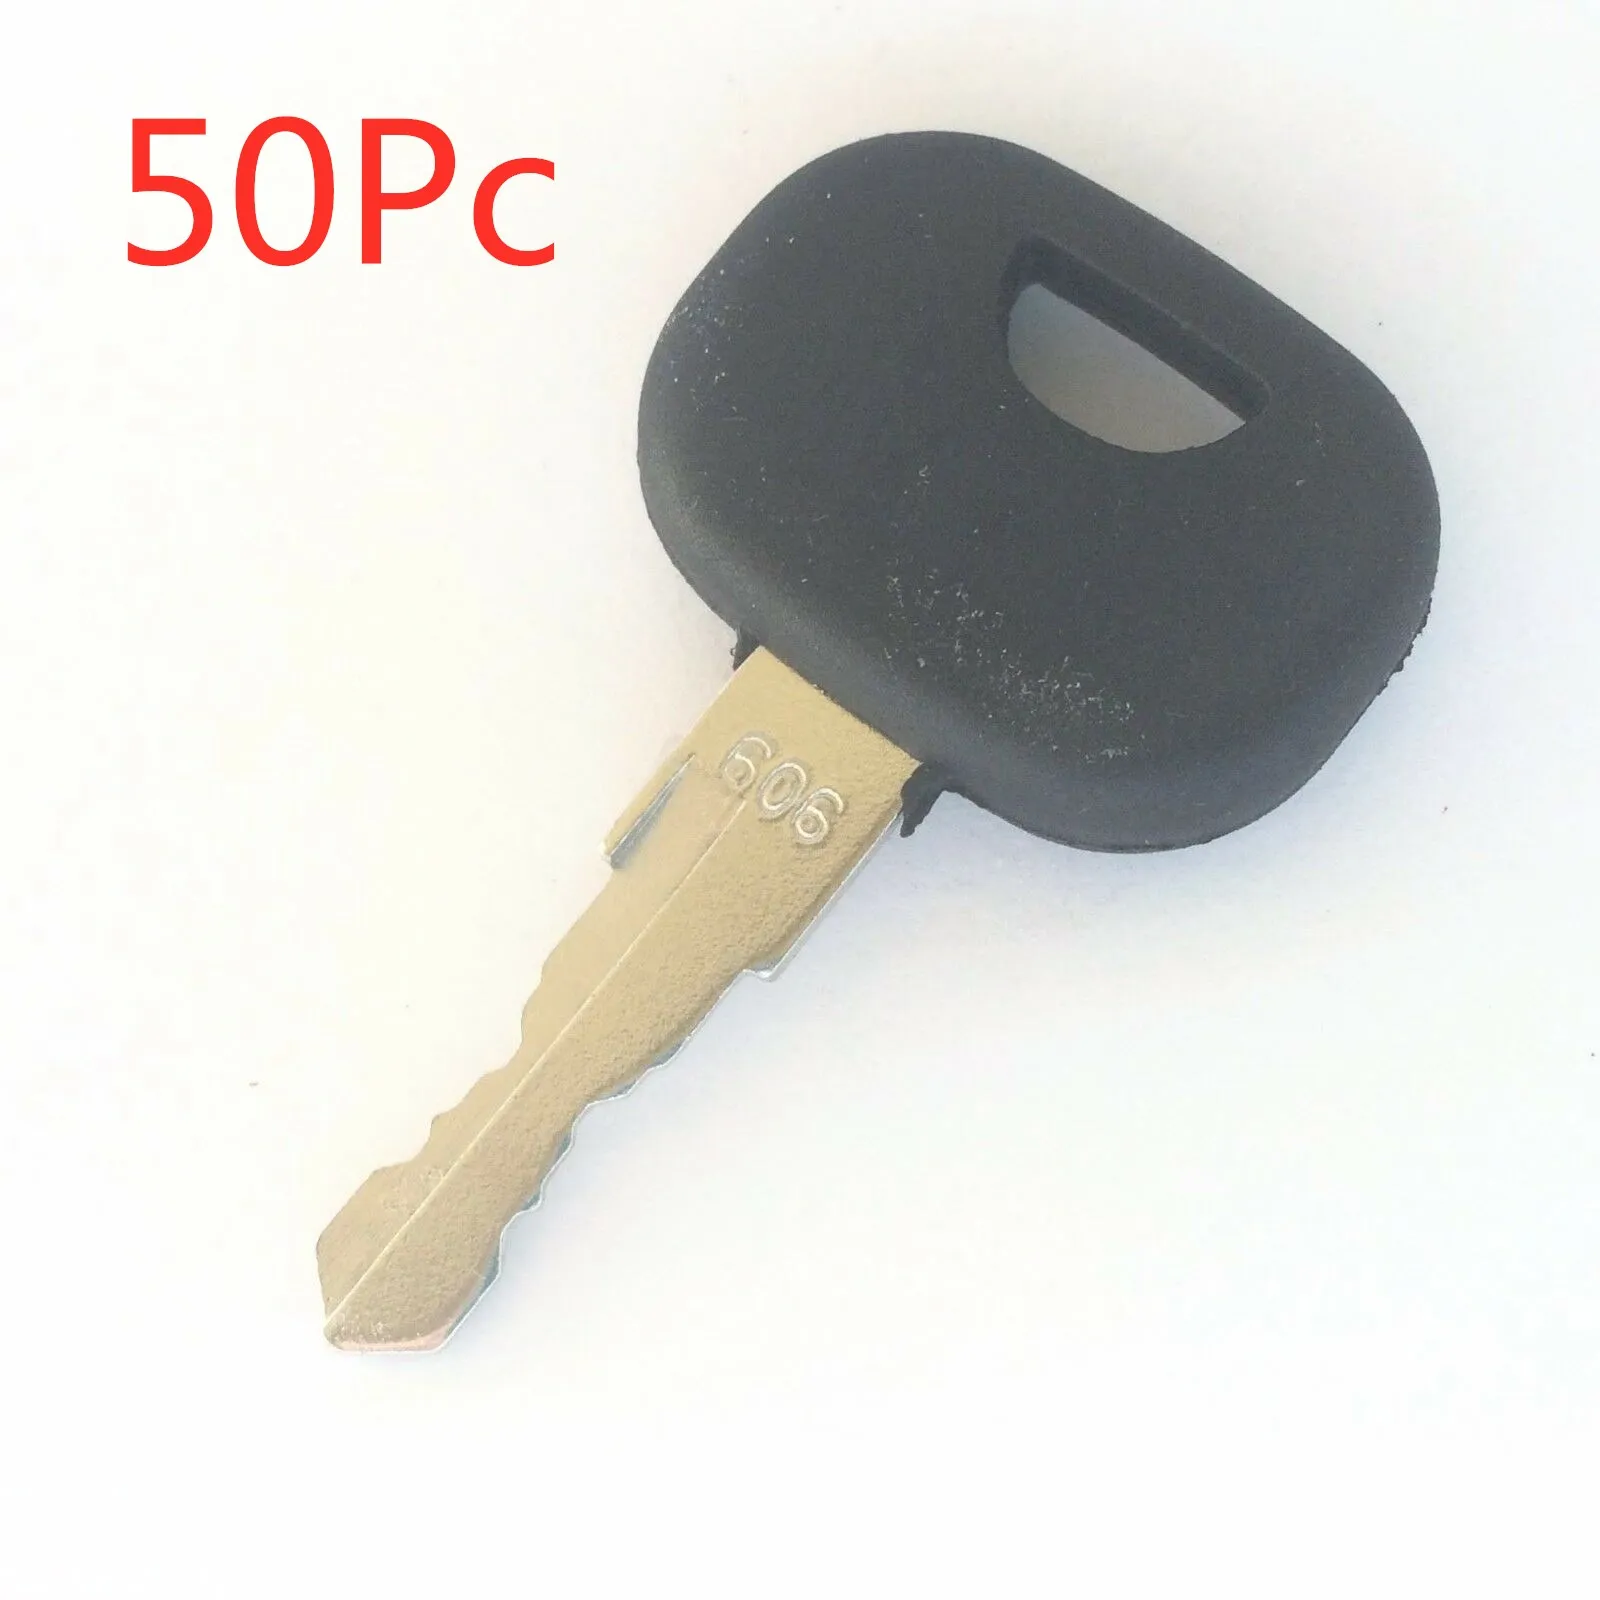 

50pc Ignition Key 606 LW10288887 Fits Crawler Loader Crawler Dozer Model For John Deere 605C 655C 755C 950C 1050C